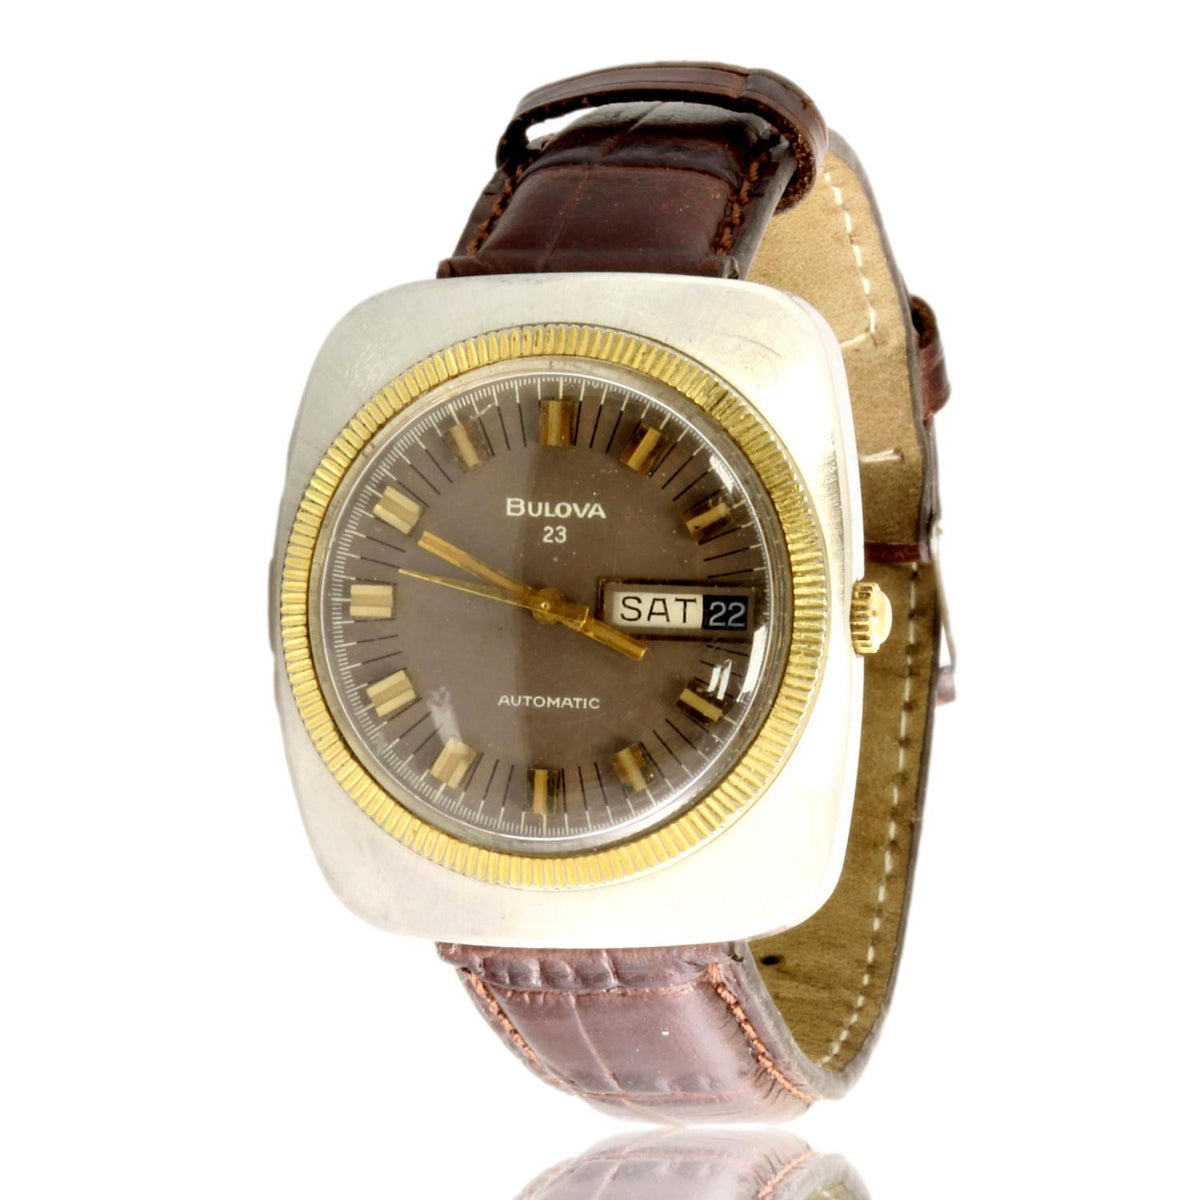 Bulova 23 Day/Date Self-Winding Stainless 10K Gold Watch